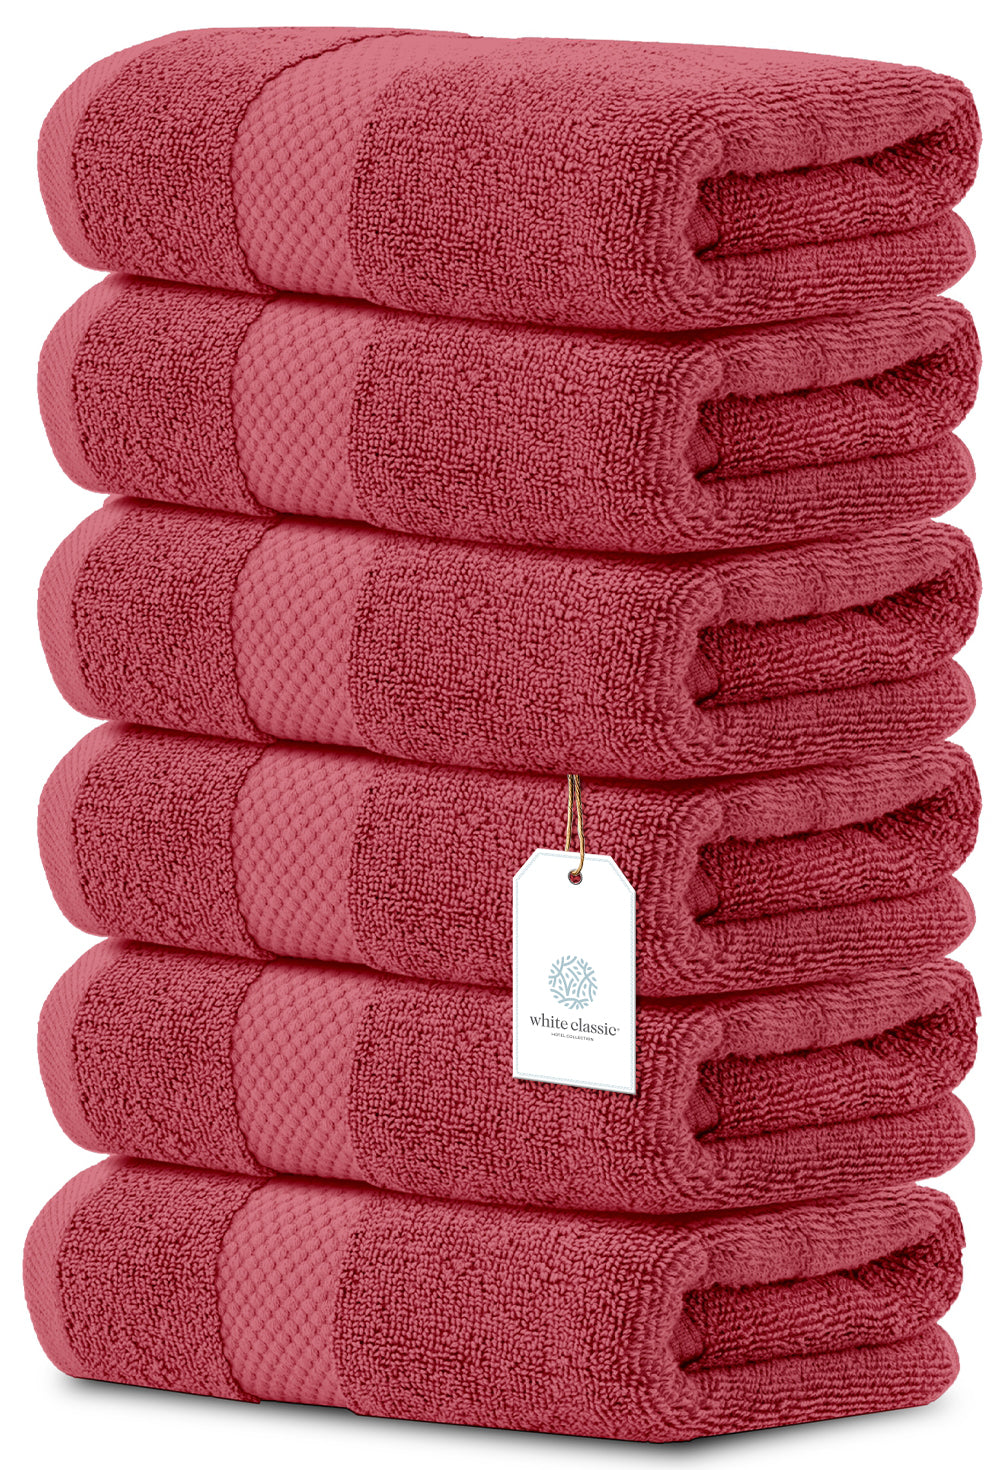 Hotel Collection Premier 100% Annur Cotton 16 x 30 Hand Towel